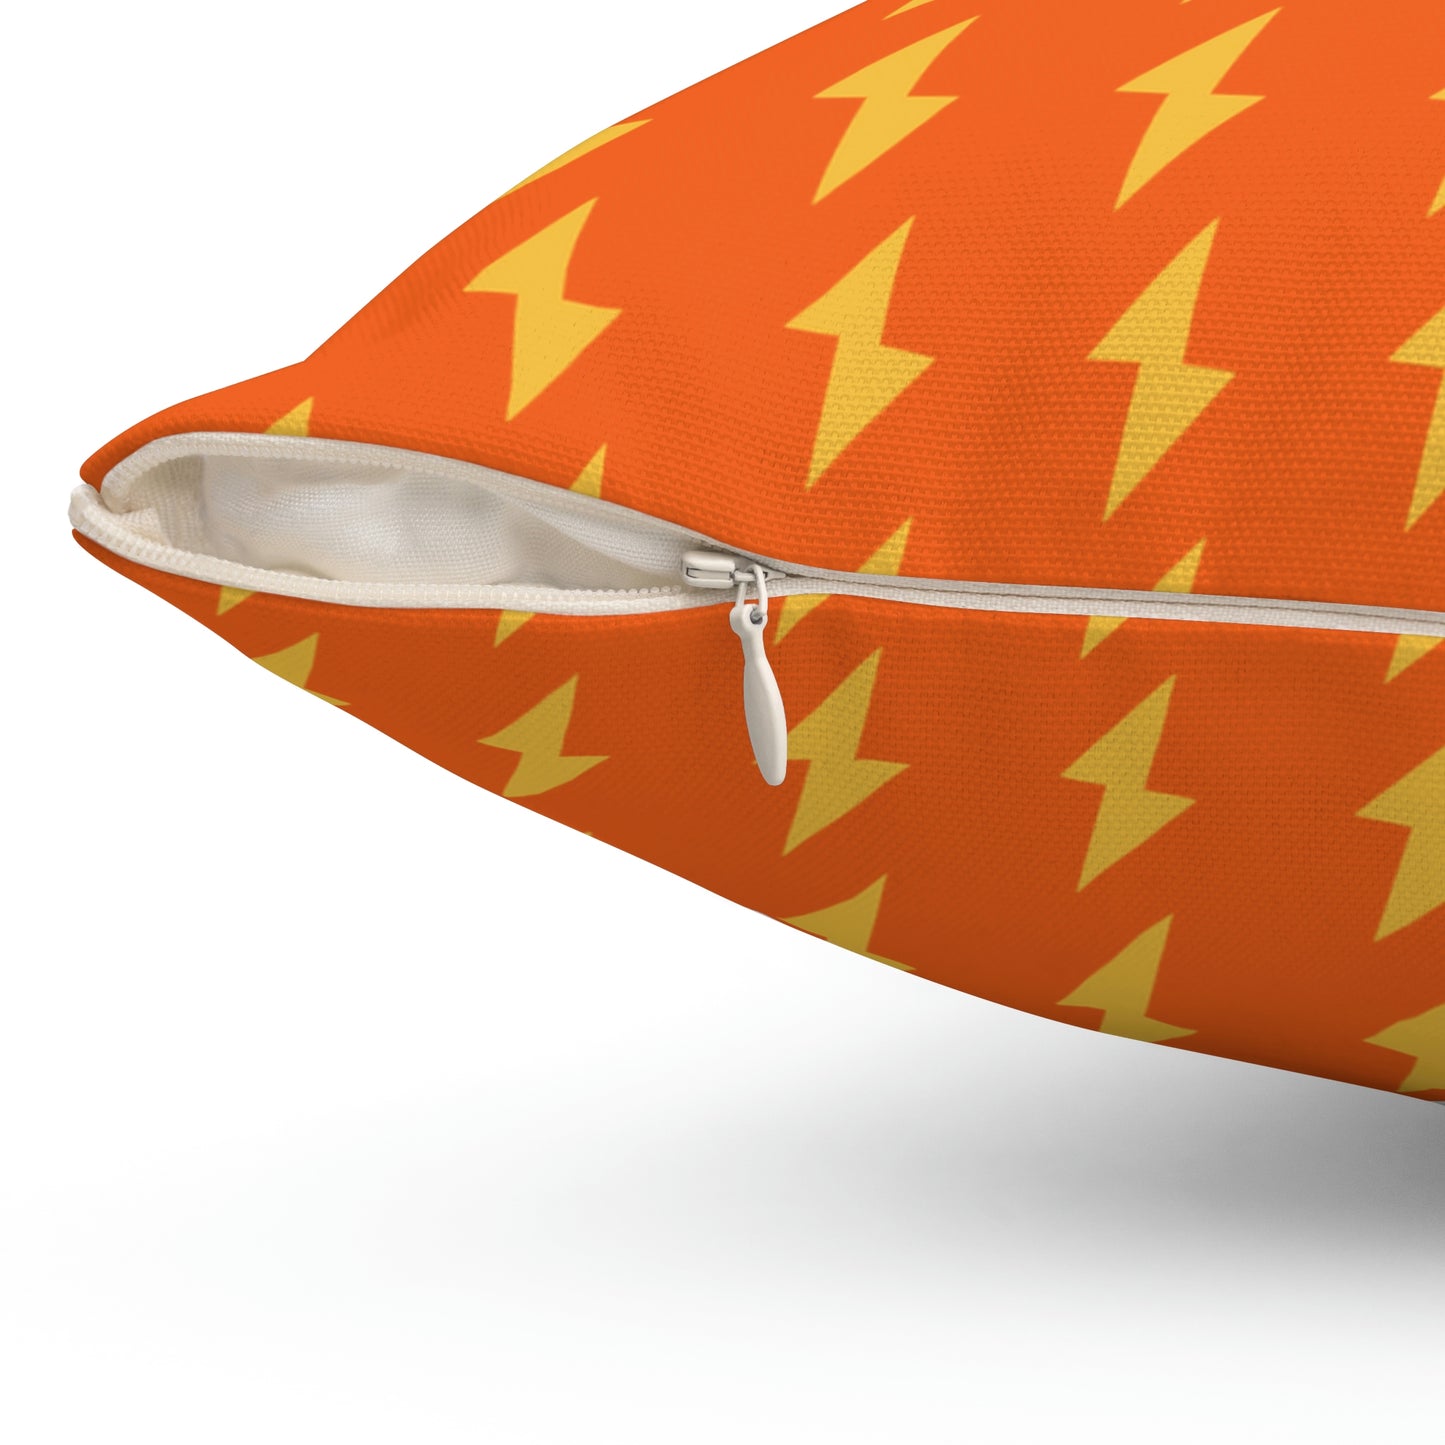 Spun Polyester Square Pillow Case “Electric Bolt on Orange”